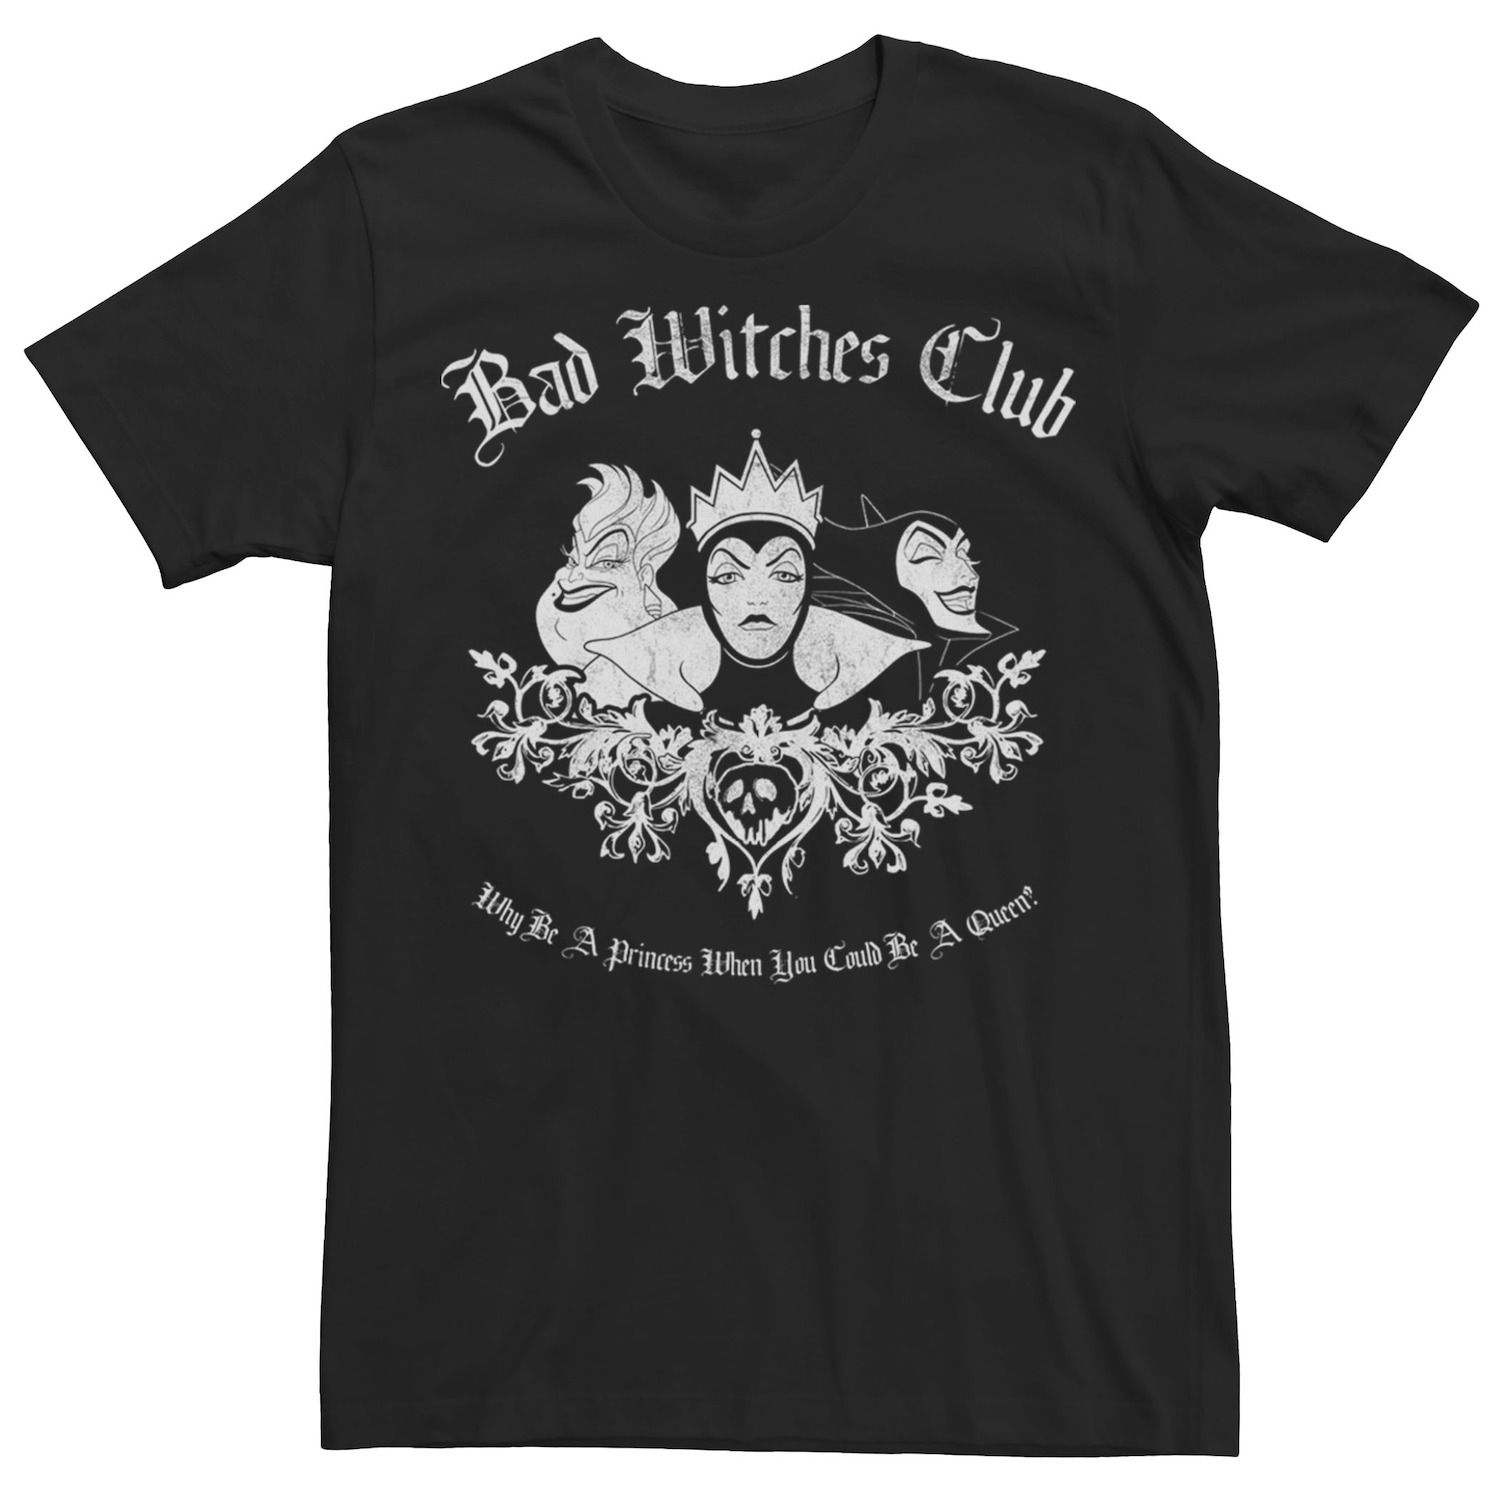 Мужская футболка Disney Villains Bad Witches Club Group Shot Licensed Character